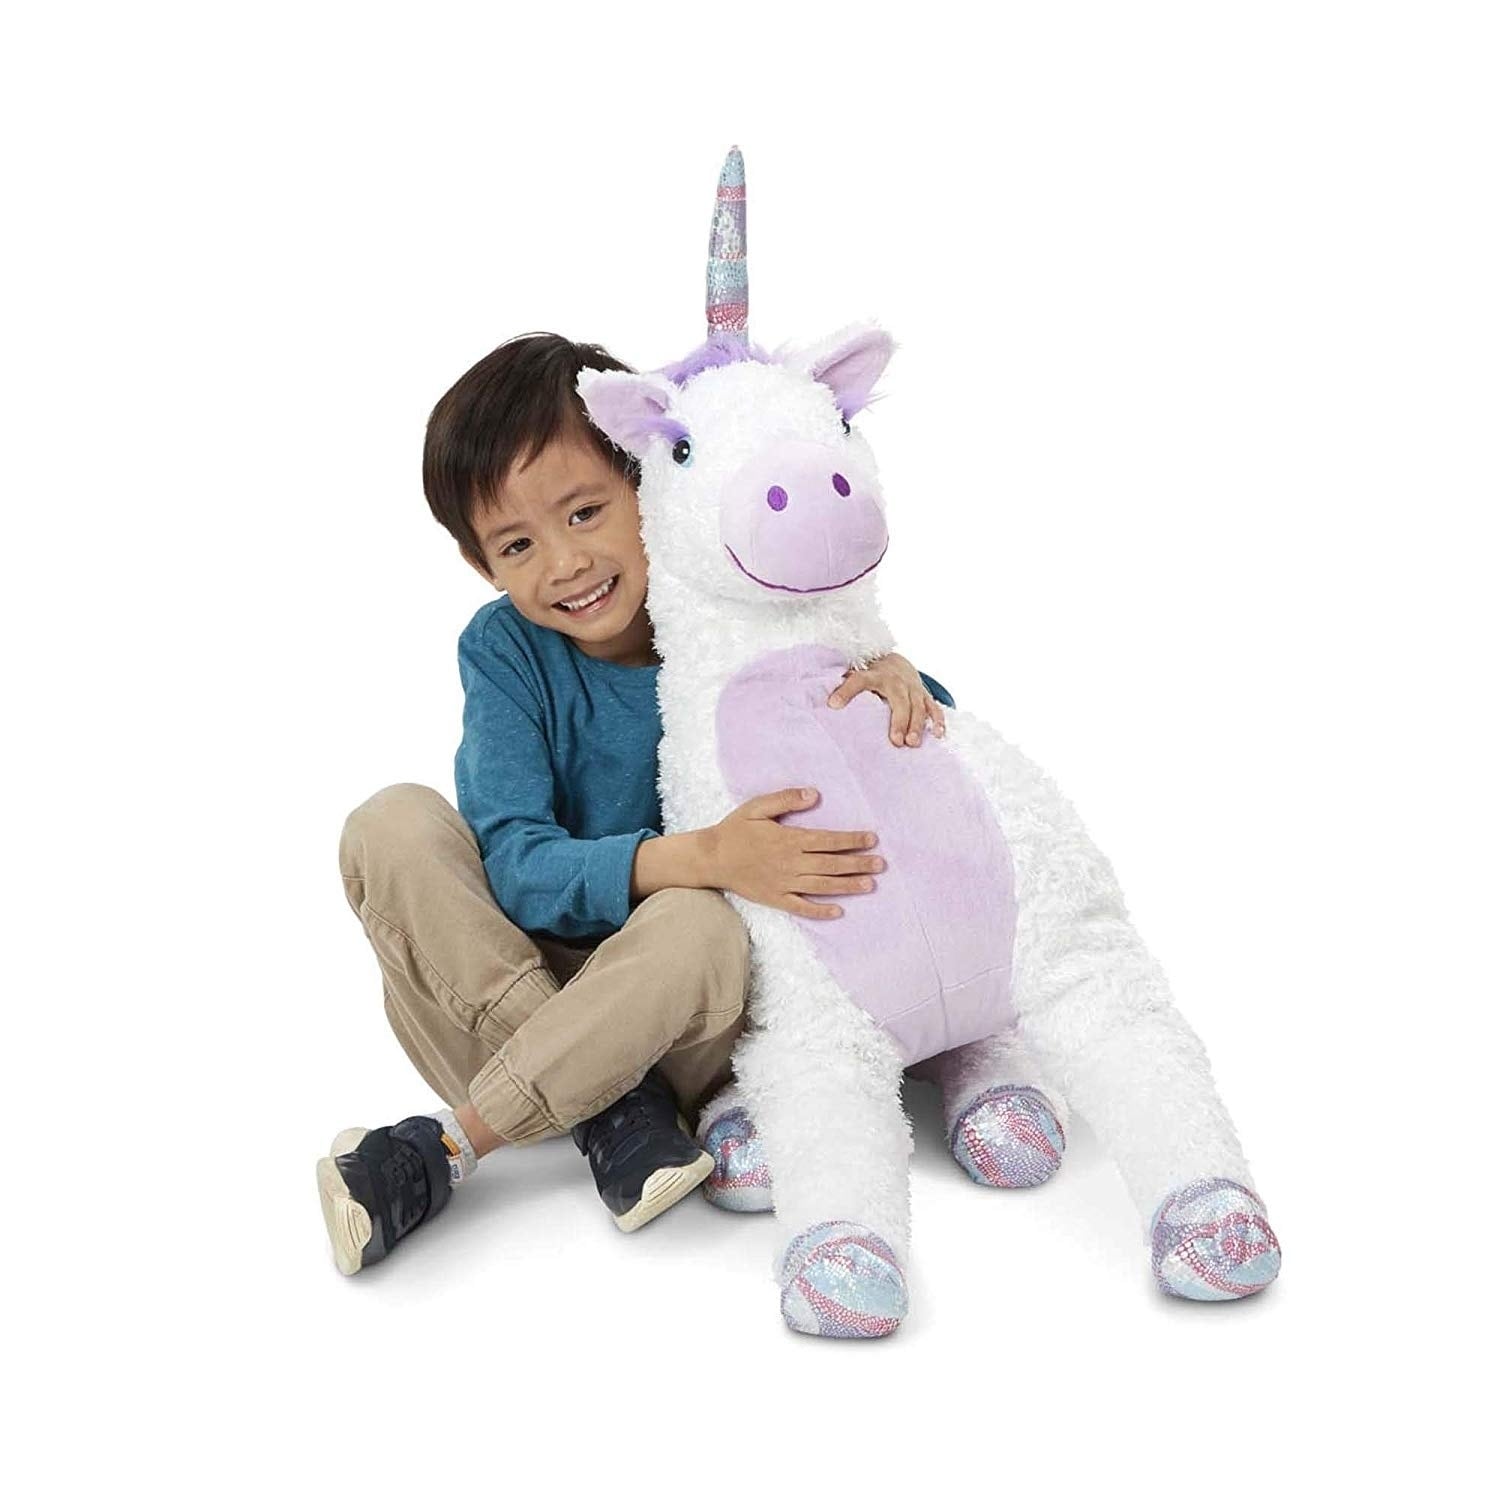 jumbo plush unicorn